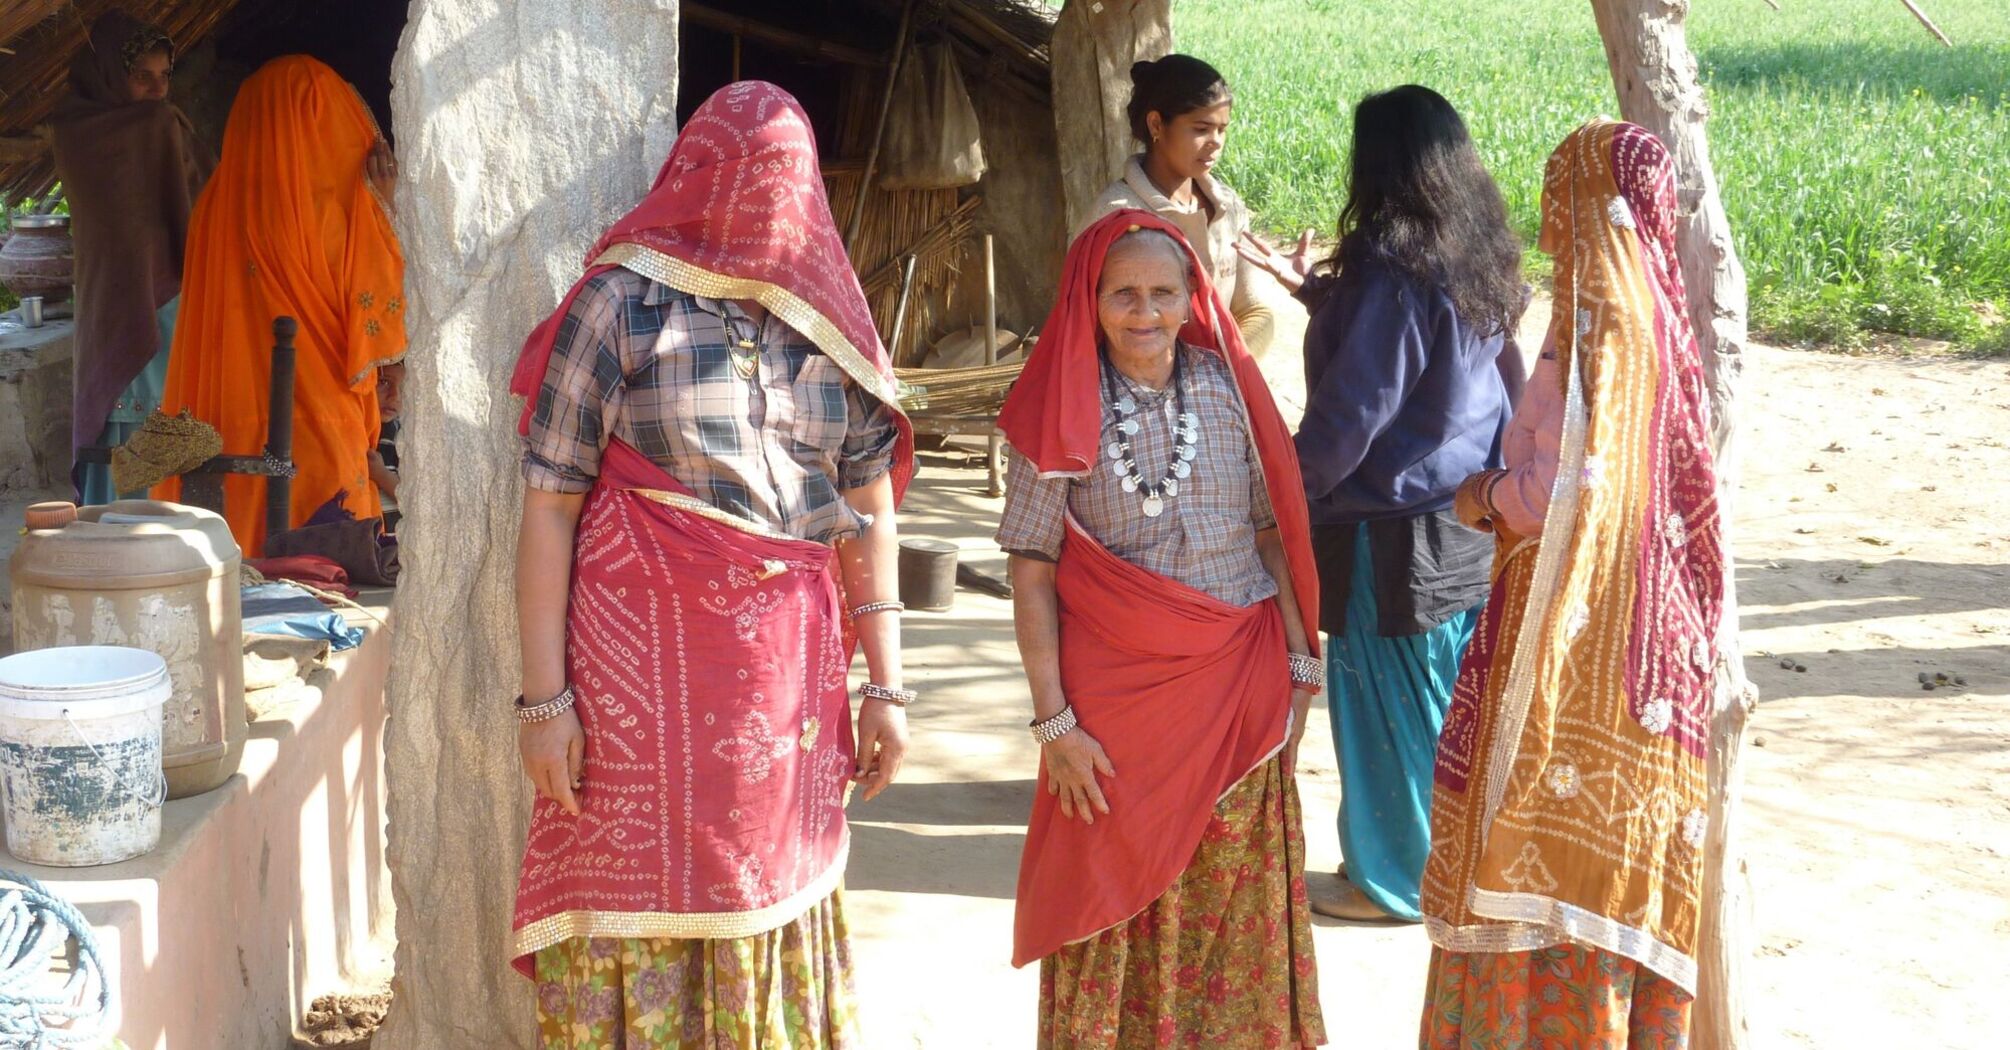 Village women in Rajasthan, India